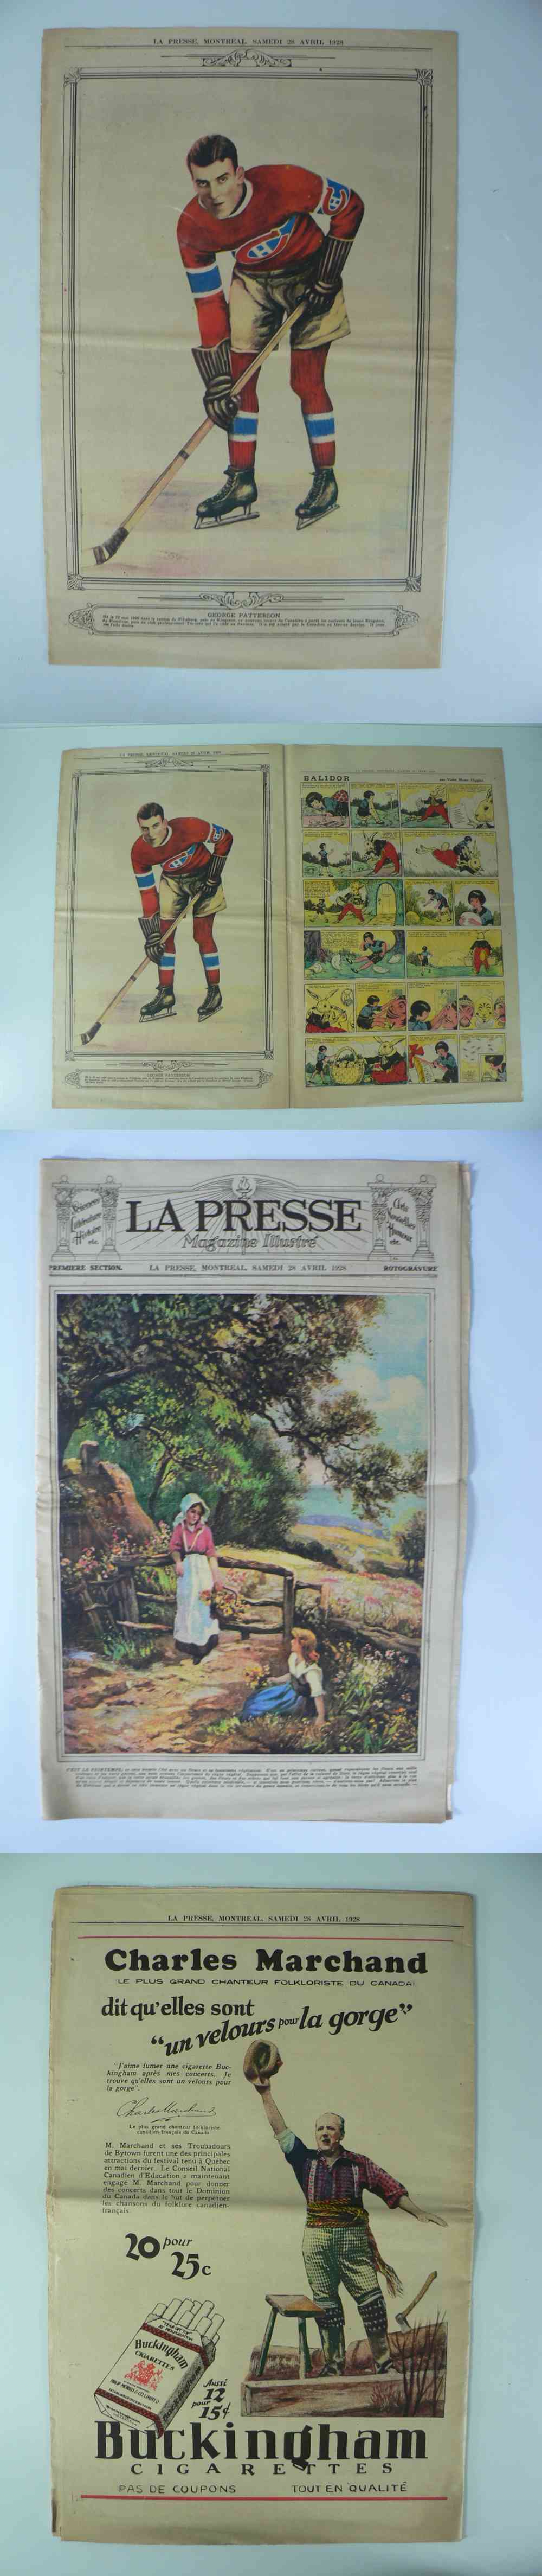 1928 LA PRESSE FULL NEWSPAPER INSIDE PHOTO G. PATTERSON photo